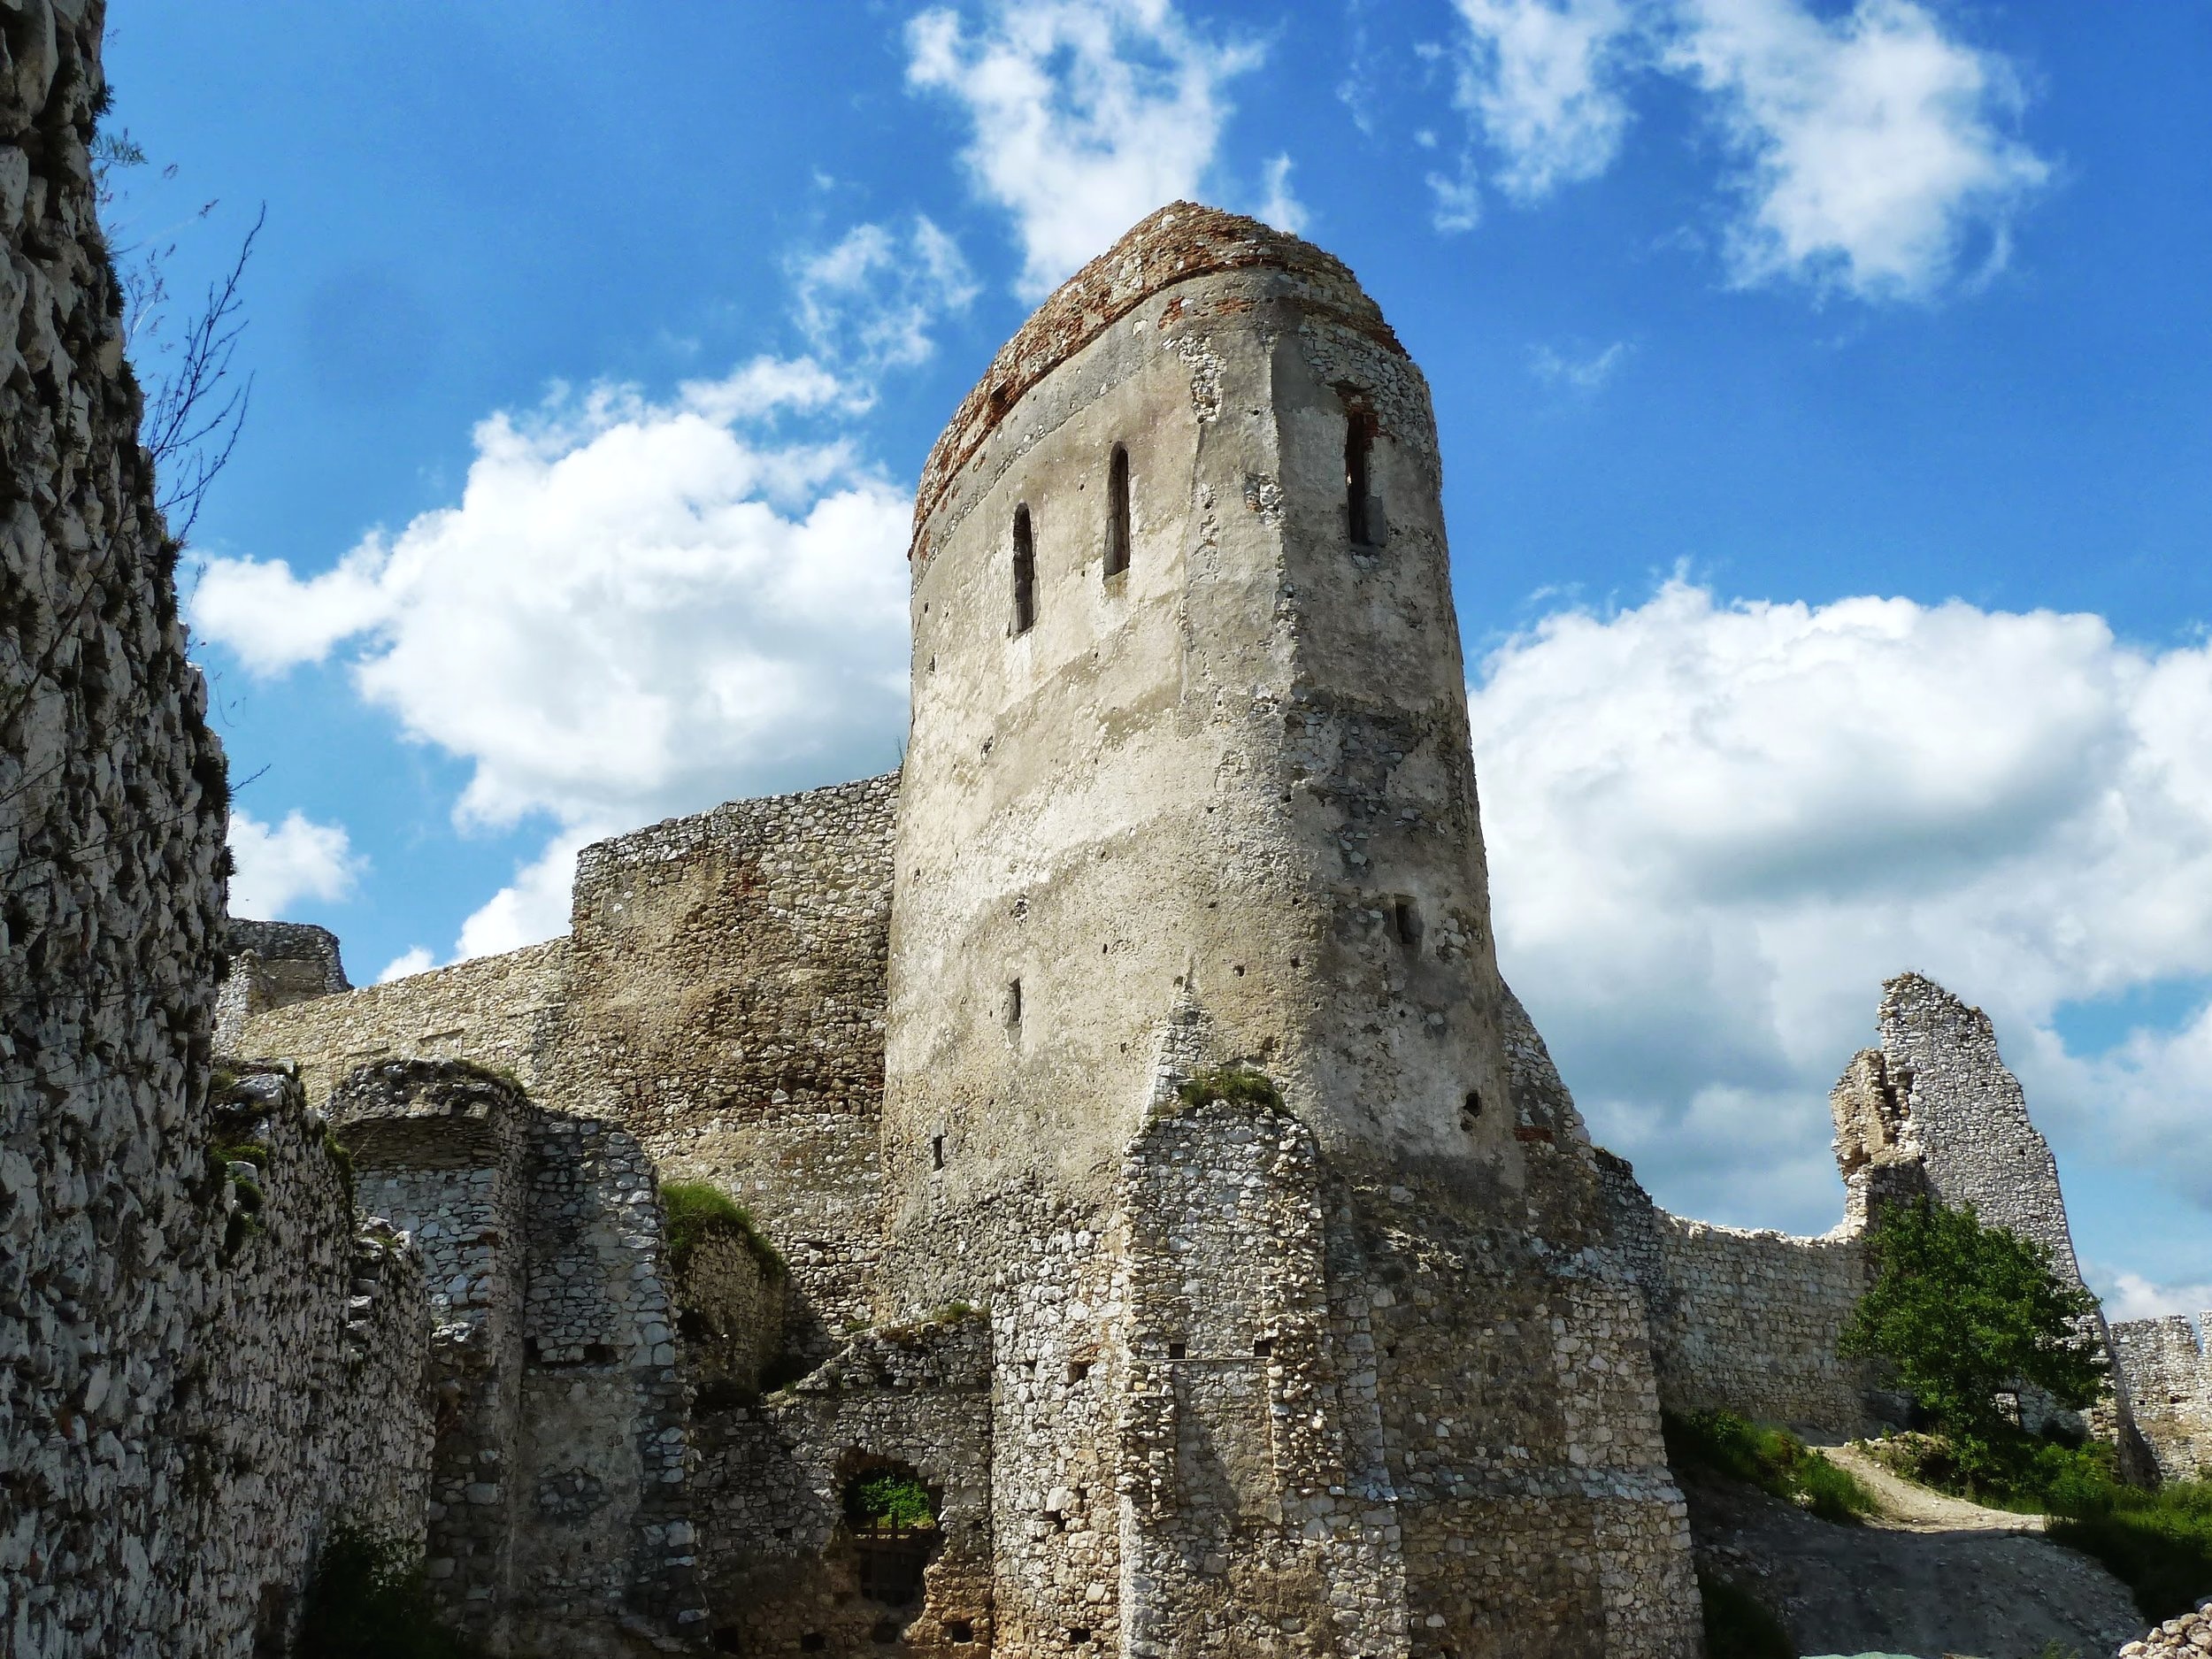  Main tower at Cachtice Castle, Slovakia.  Photo by  Jacomoman78  -  CC BY-SA 3.0  